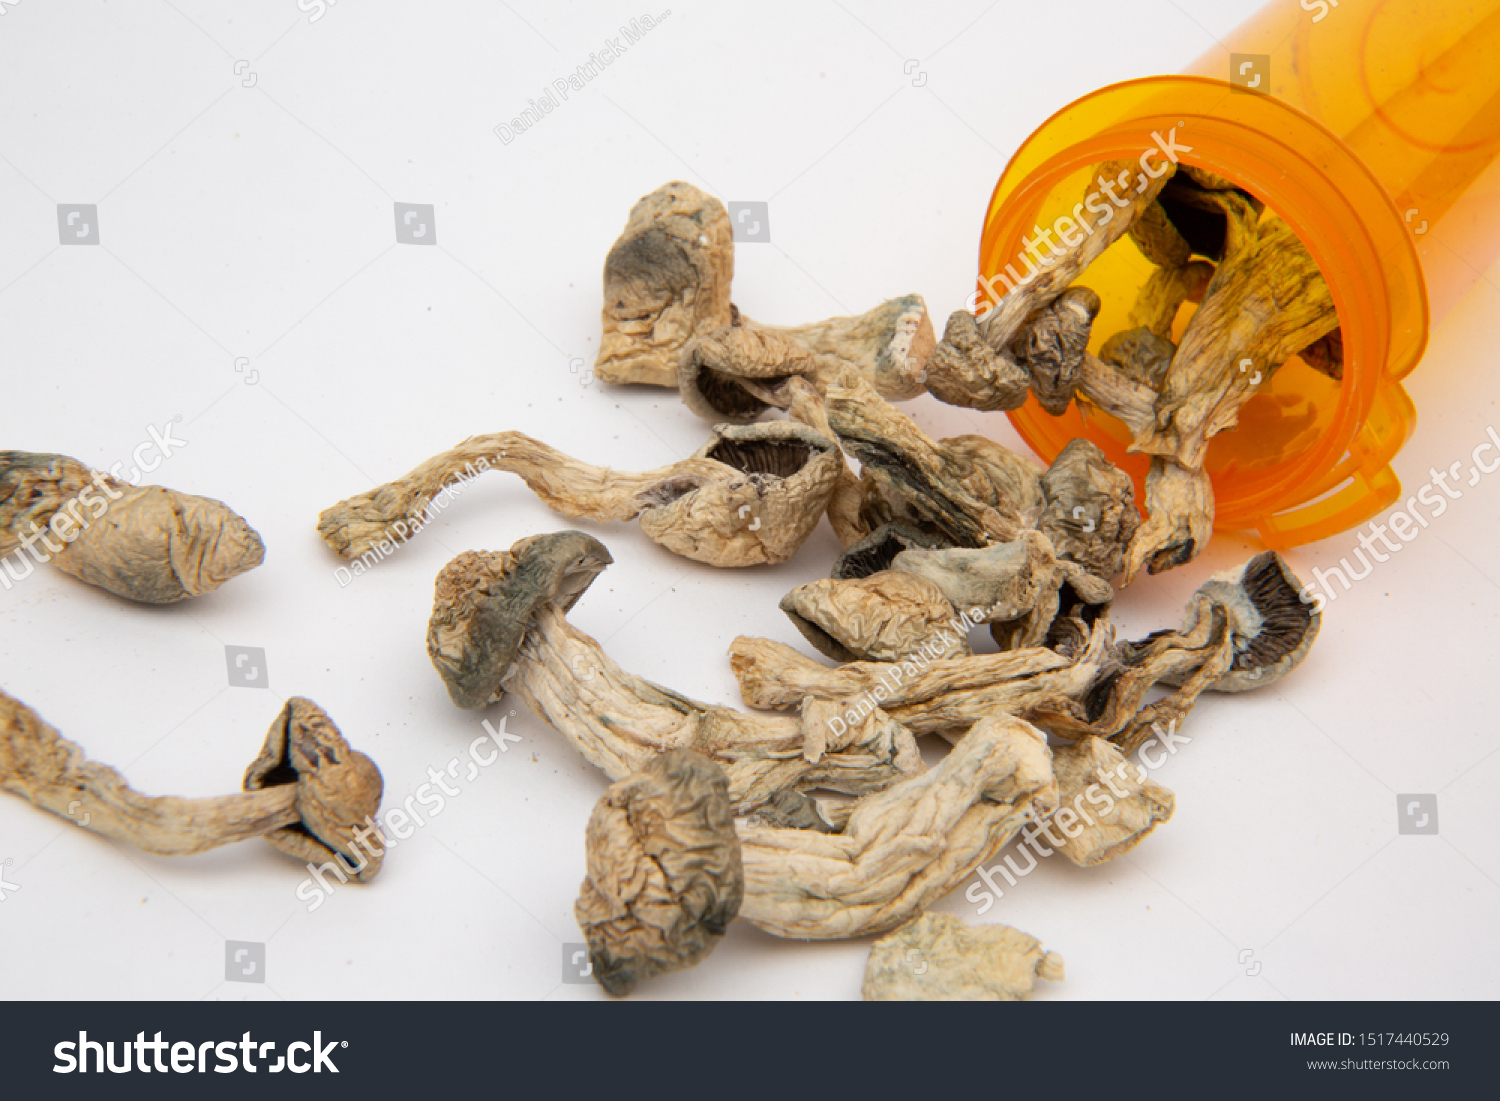 Plastic prescription medicine bottle knocked over containing dried psilocybe cubensis psilocybin magic mushrooms isolated on white background #1517440529